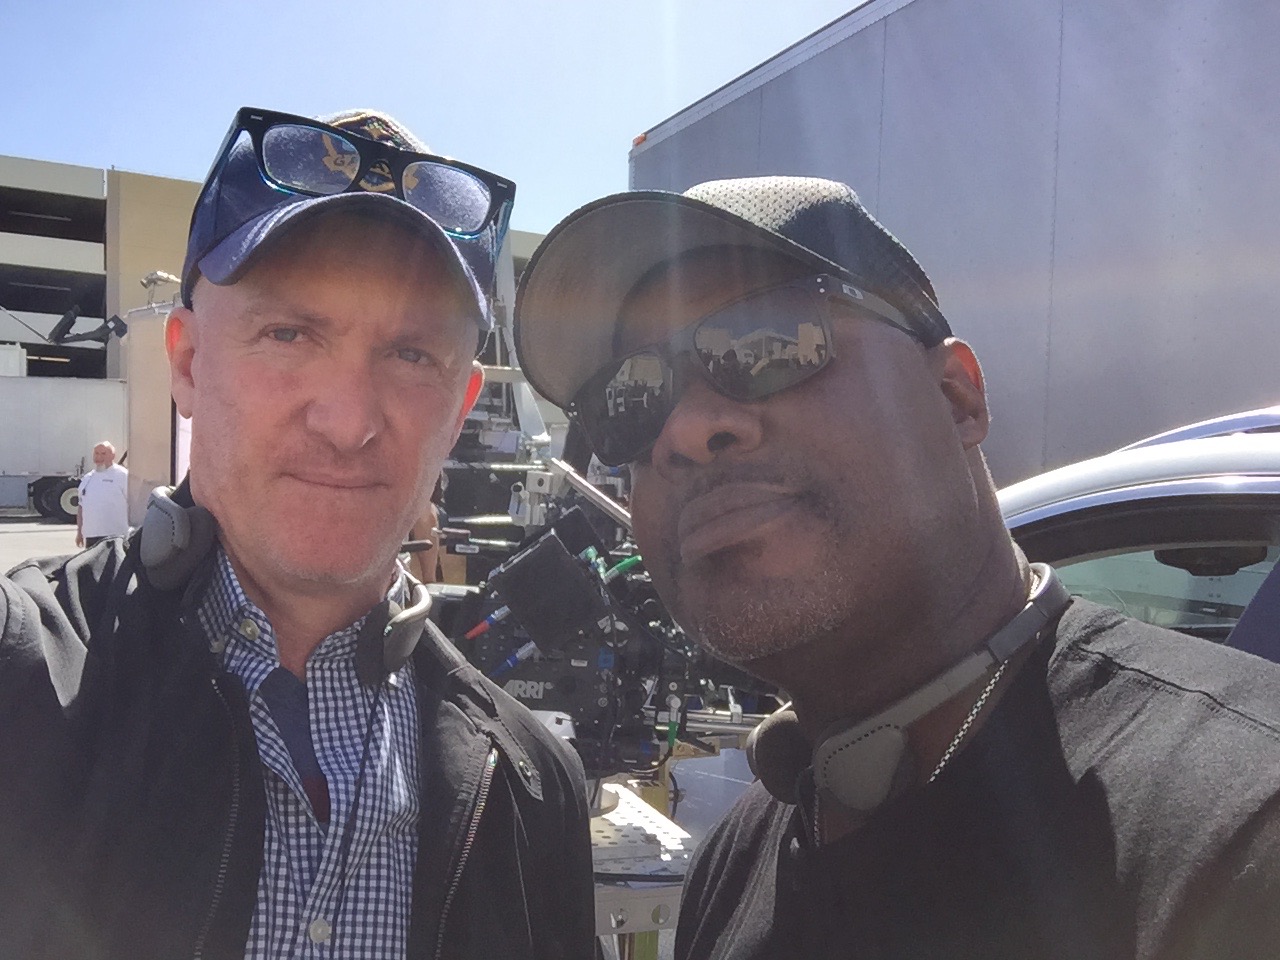 NCIS LA Producer/Writer Joe Wilson and Director James Hanlon at Paramount Studios